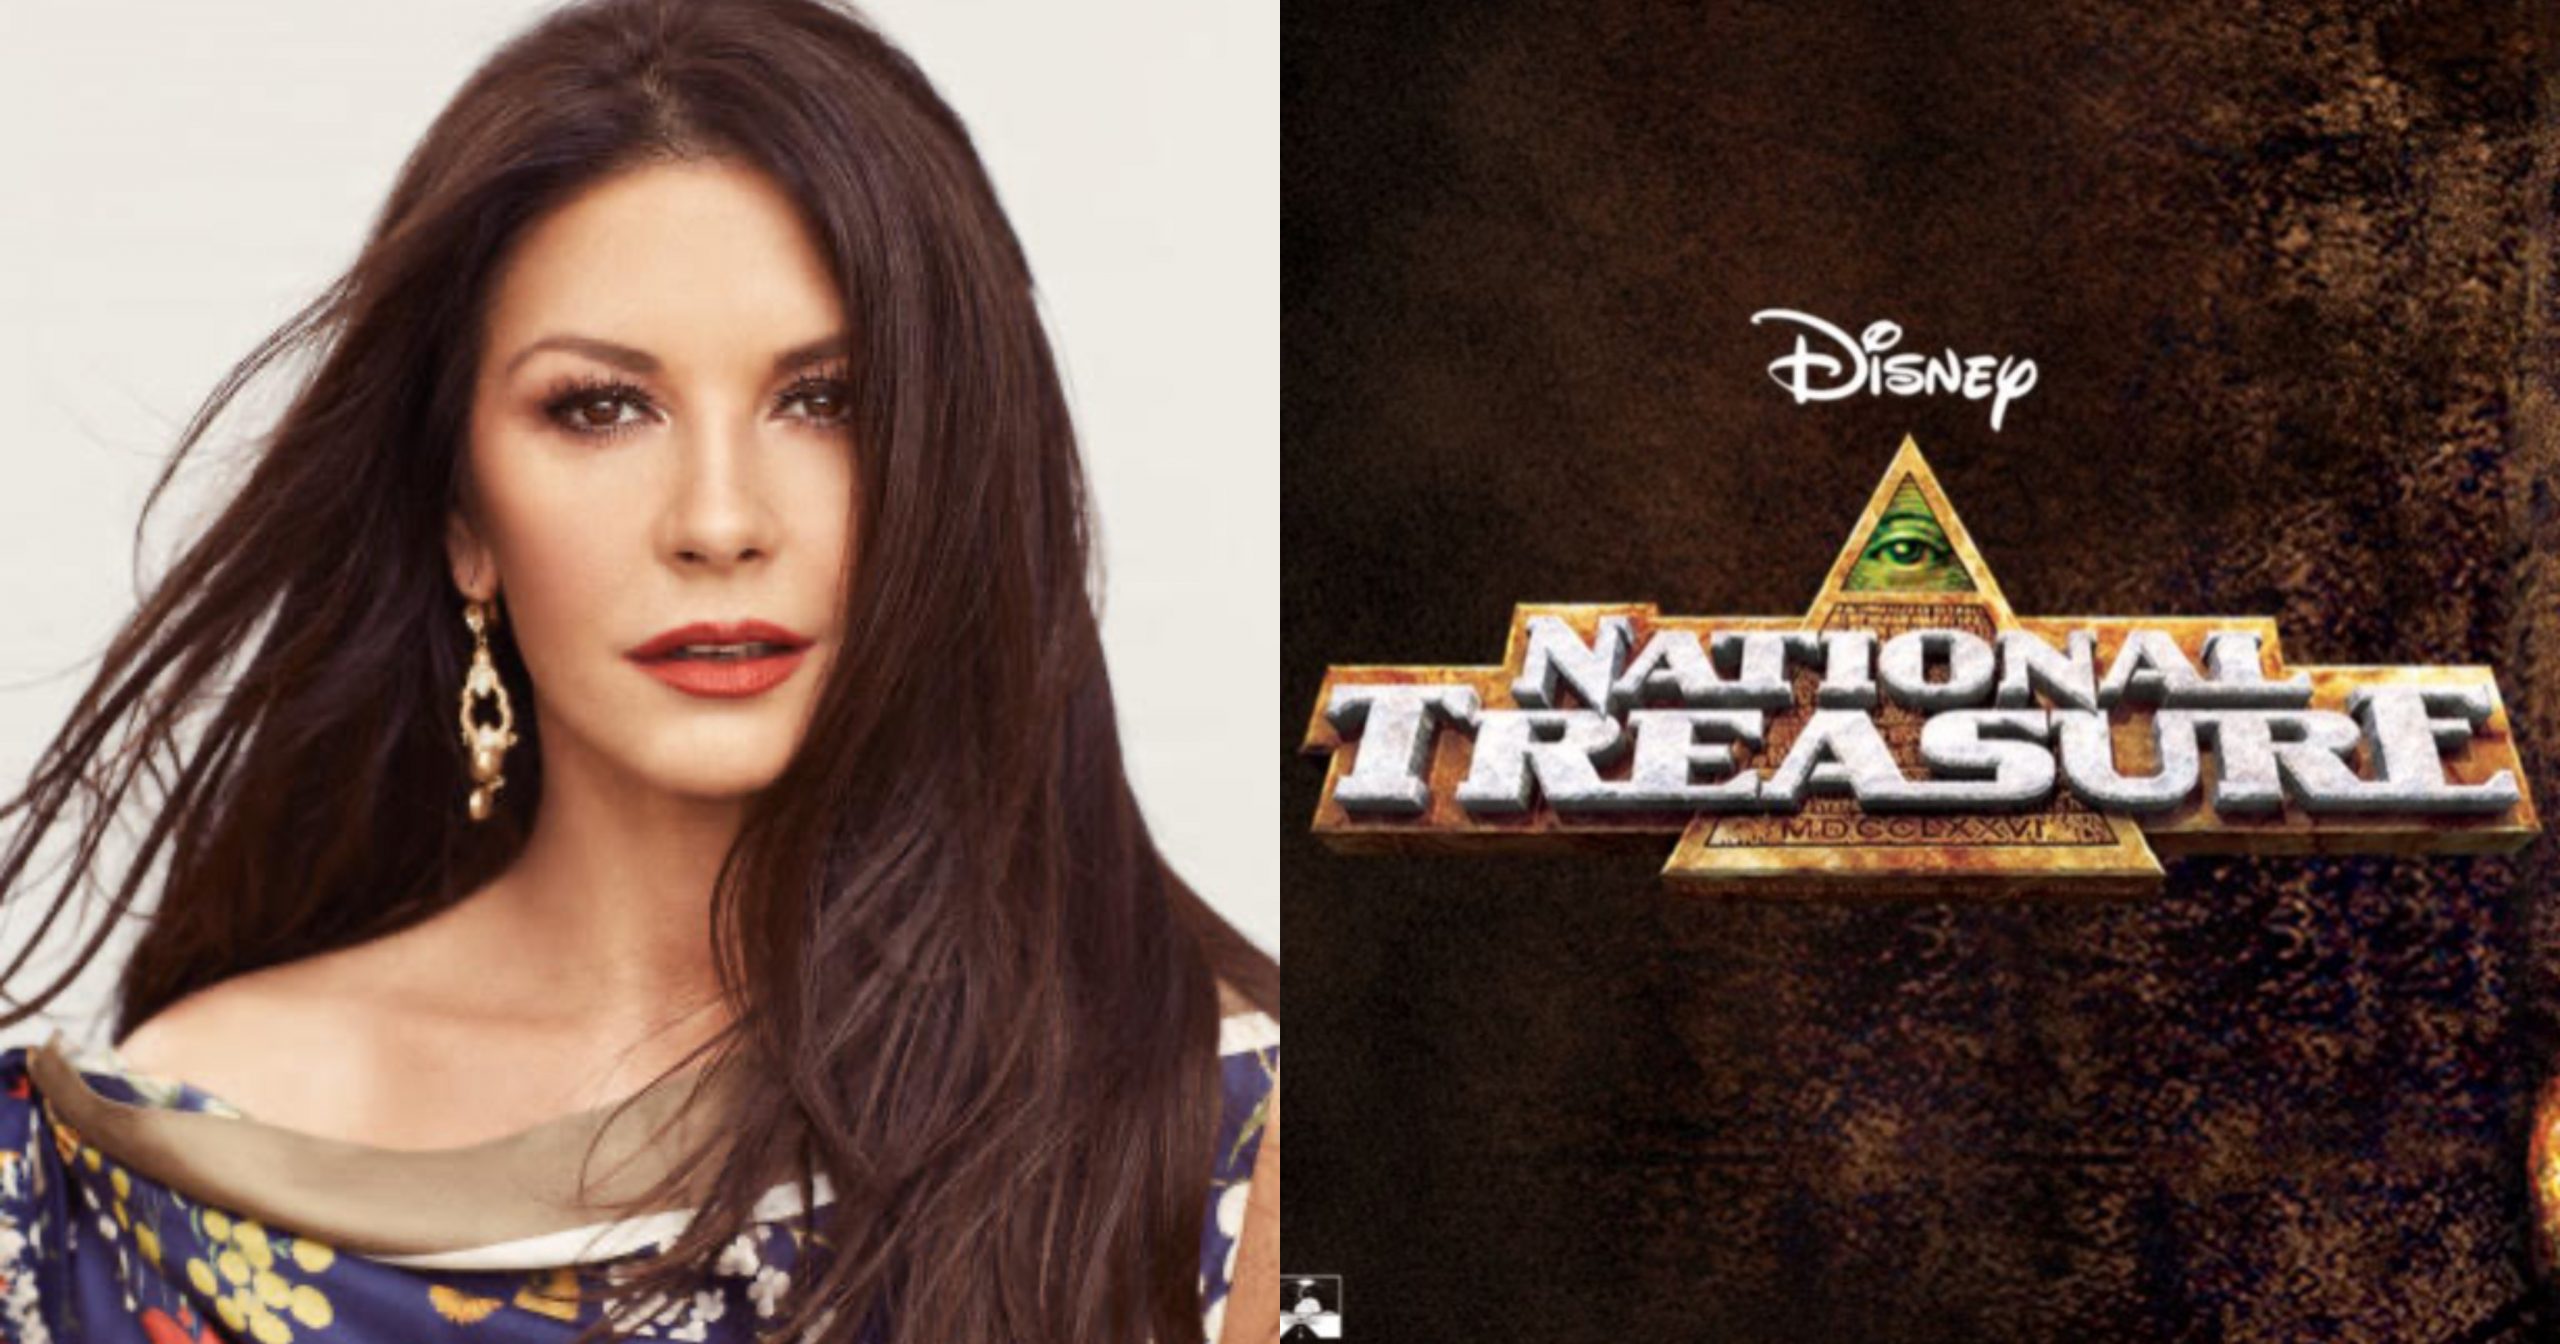 Catherine Zeta-Jones Joins Disney New Original Series “National Treasure”